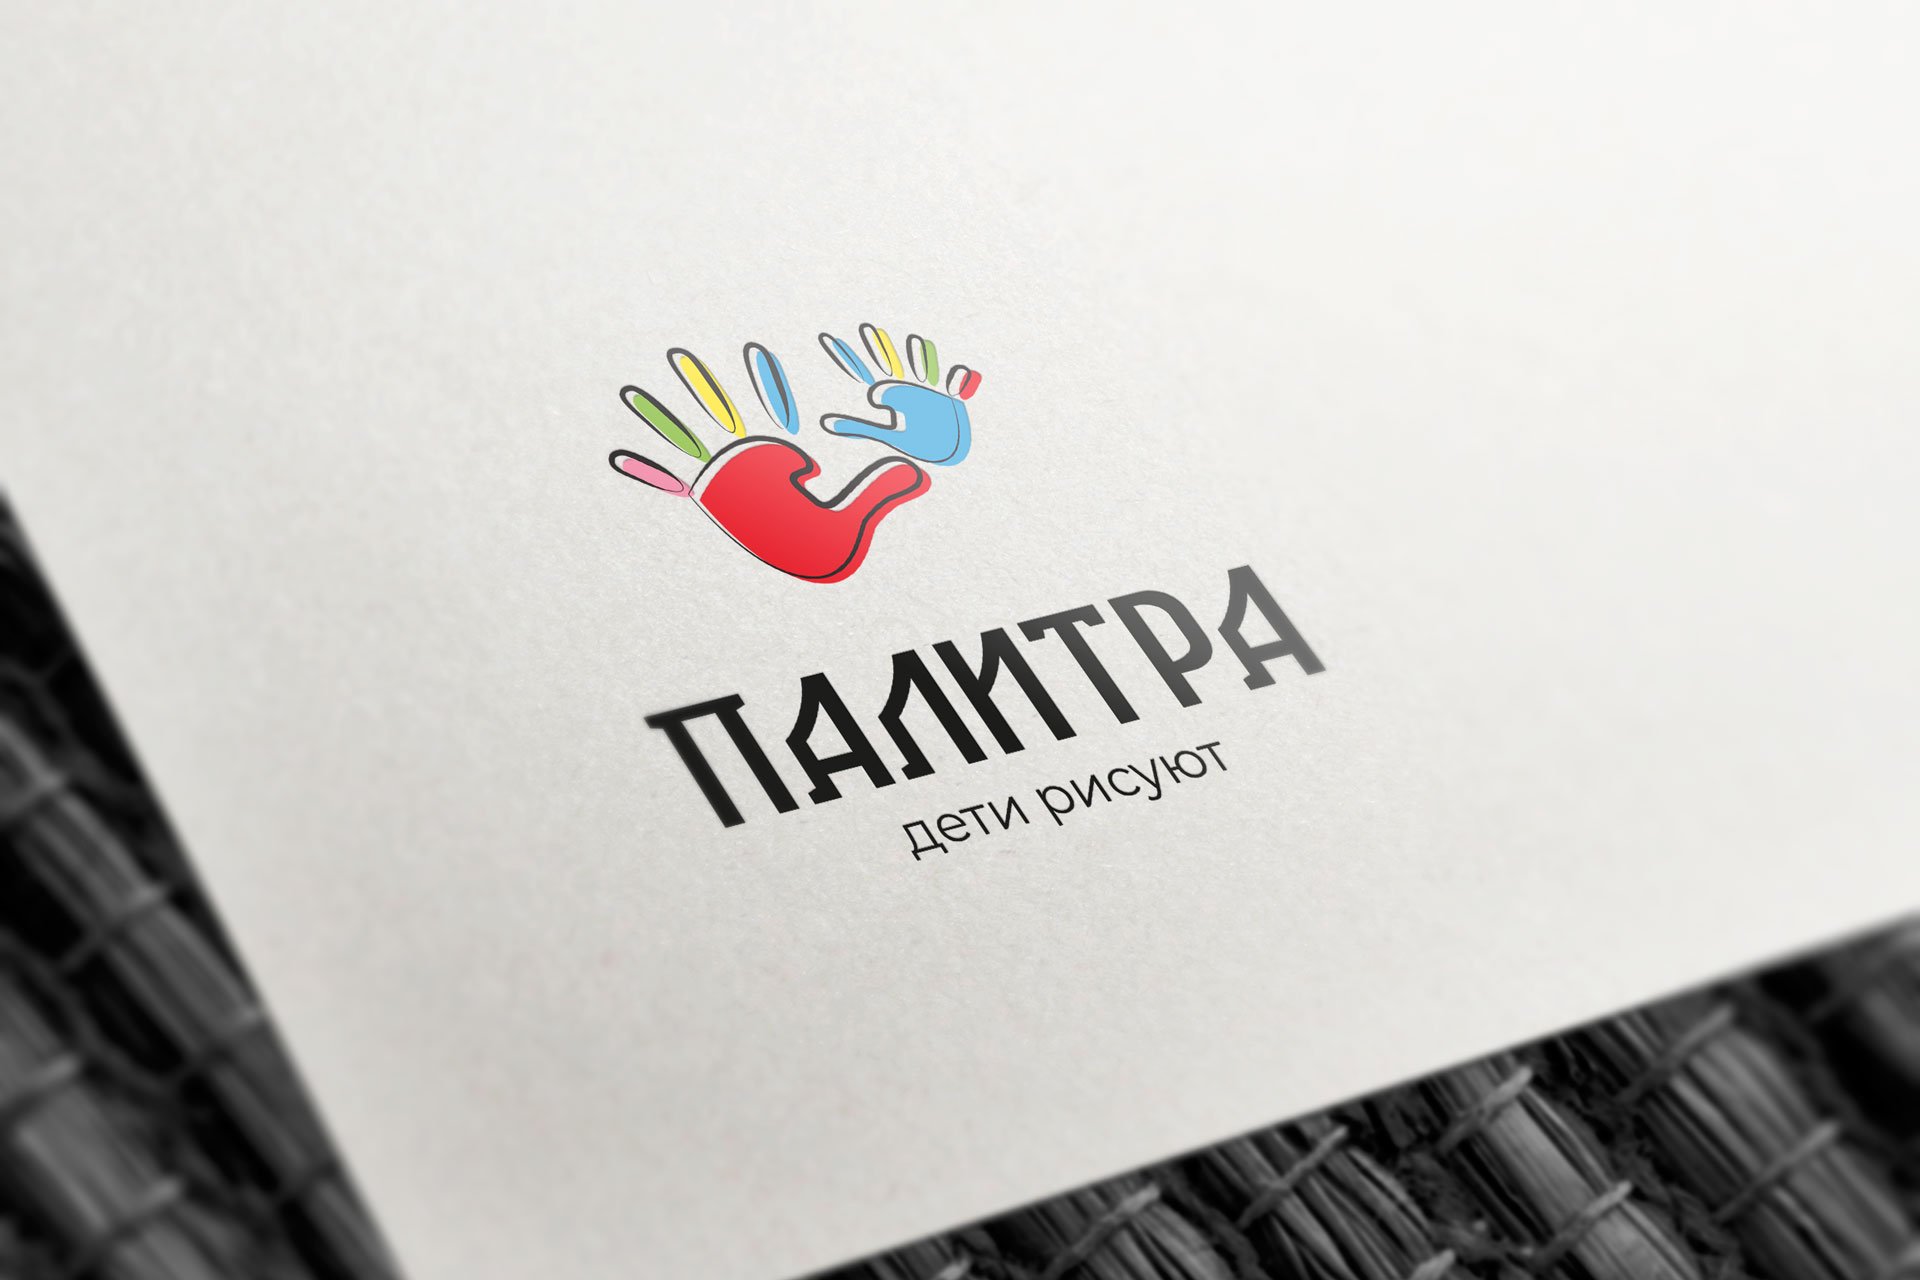 Логотип на заказ в москве. Разработка логотипа. Создание логотипа. Разработка дизайна логотипа. Логотипы фирм.